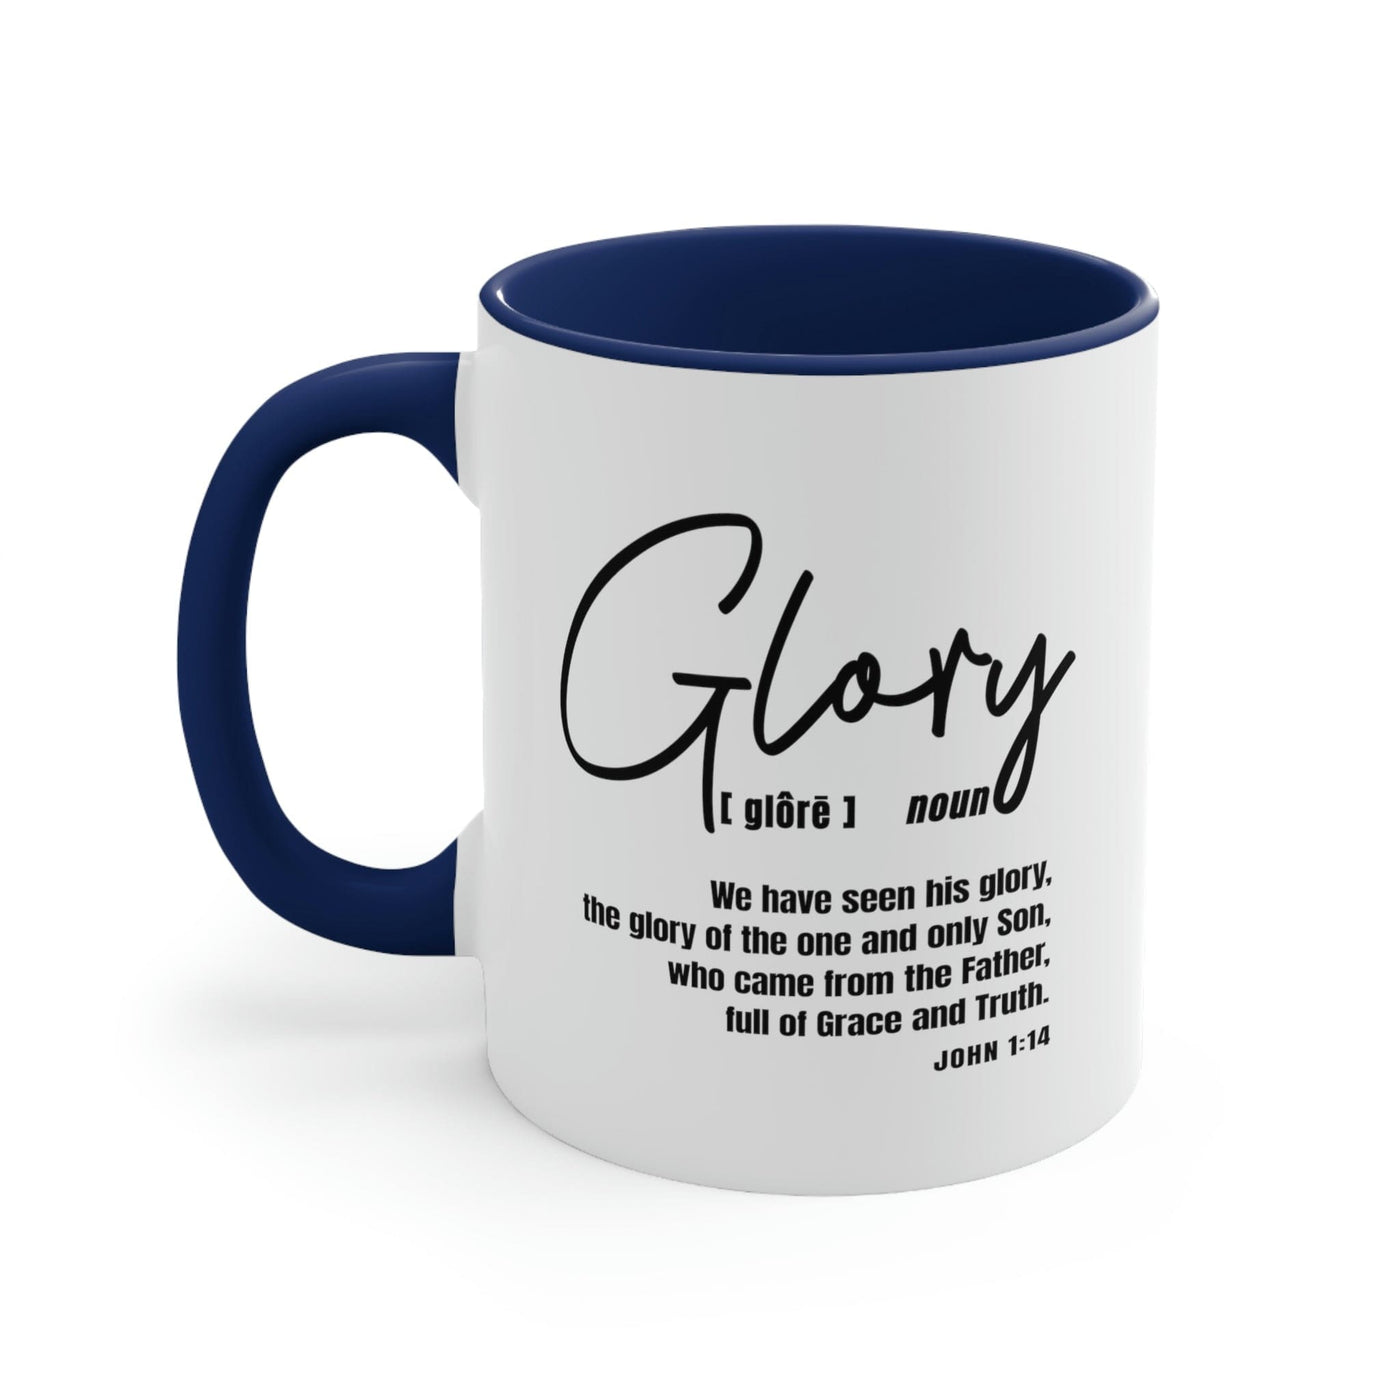 Two - tone Accent Ceramic Mug 11oz Glory Christian Inspiration Black